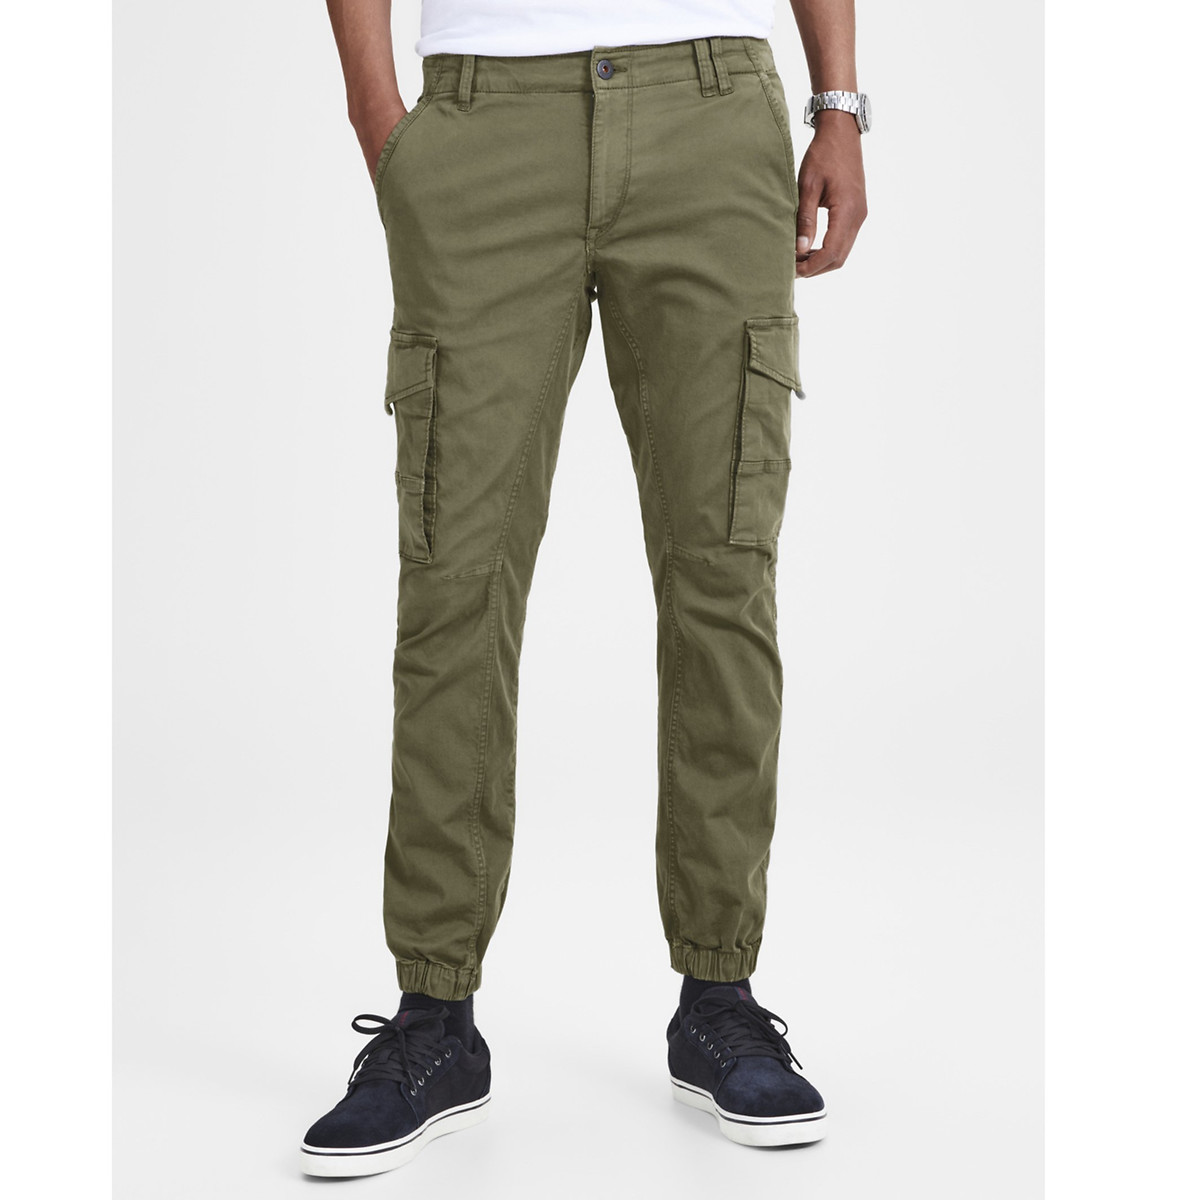 Jjpaul jjflake cargo trousers, khaki green, Jack & Jones | La Redoute